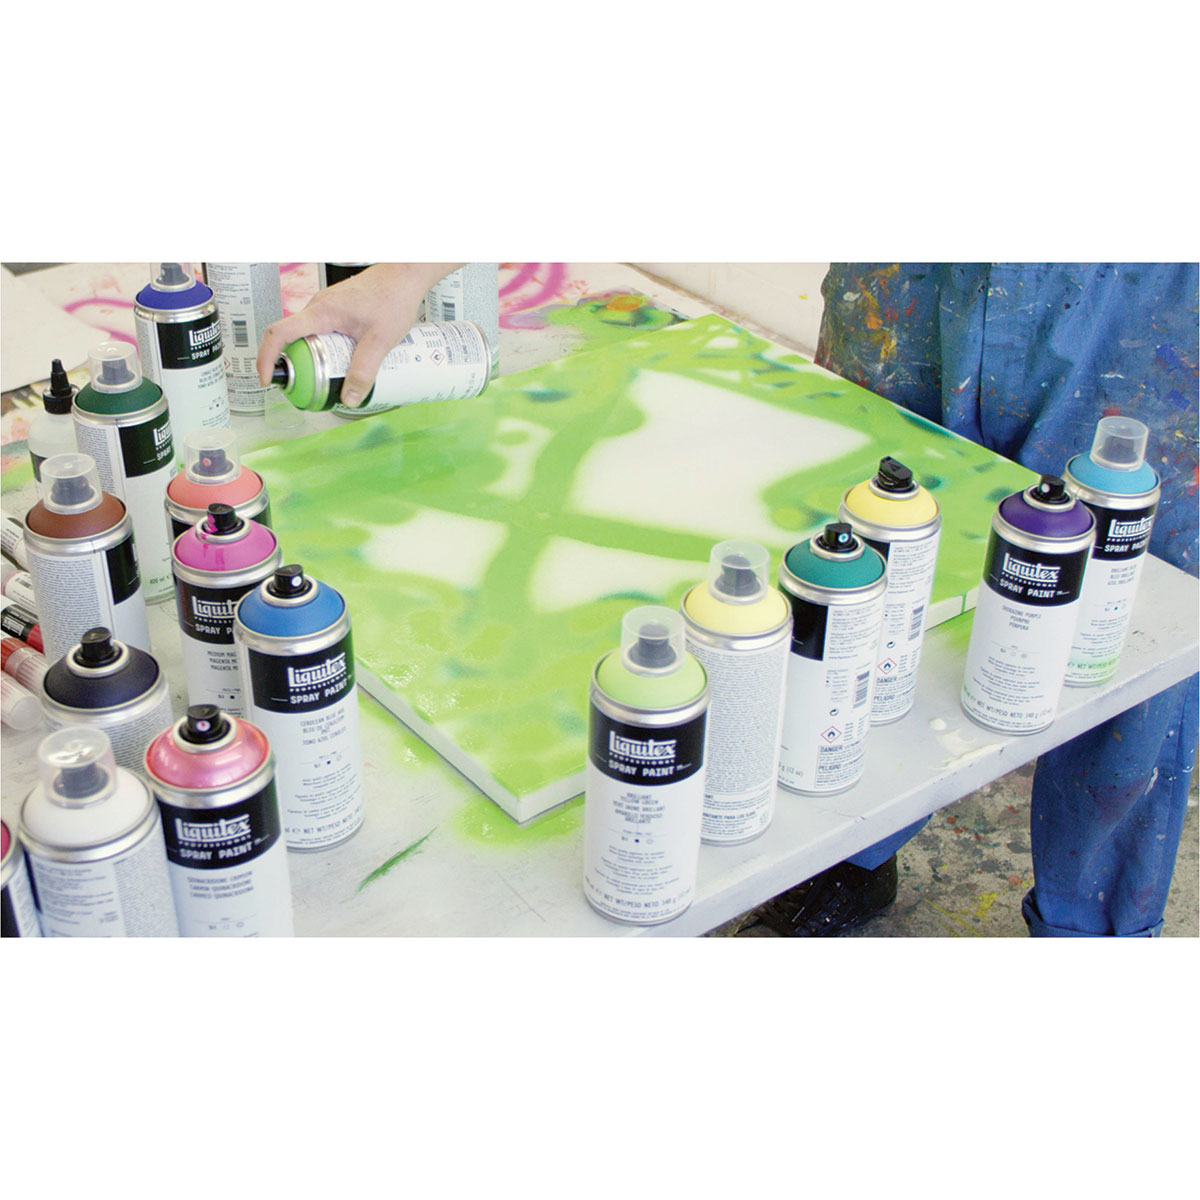 Liquitex Professional Spray Paint 400 mL, Iridescent Rich Silver